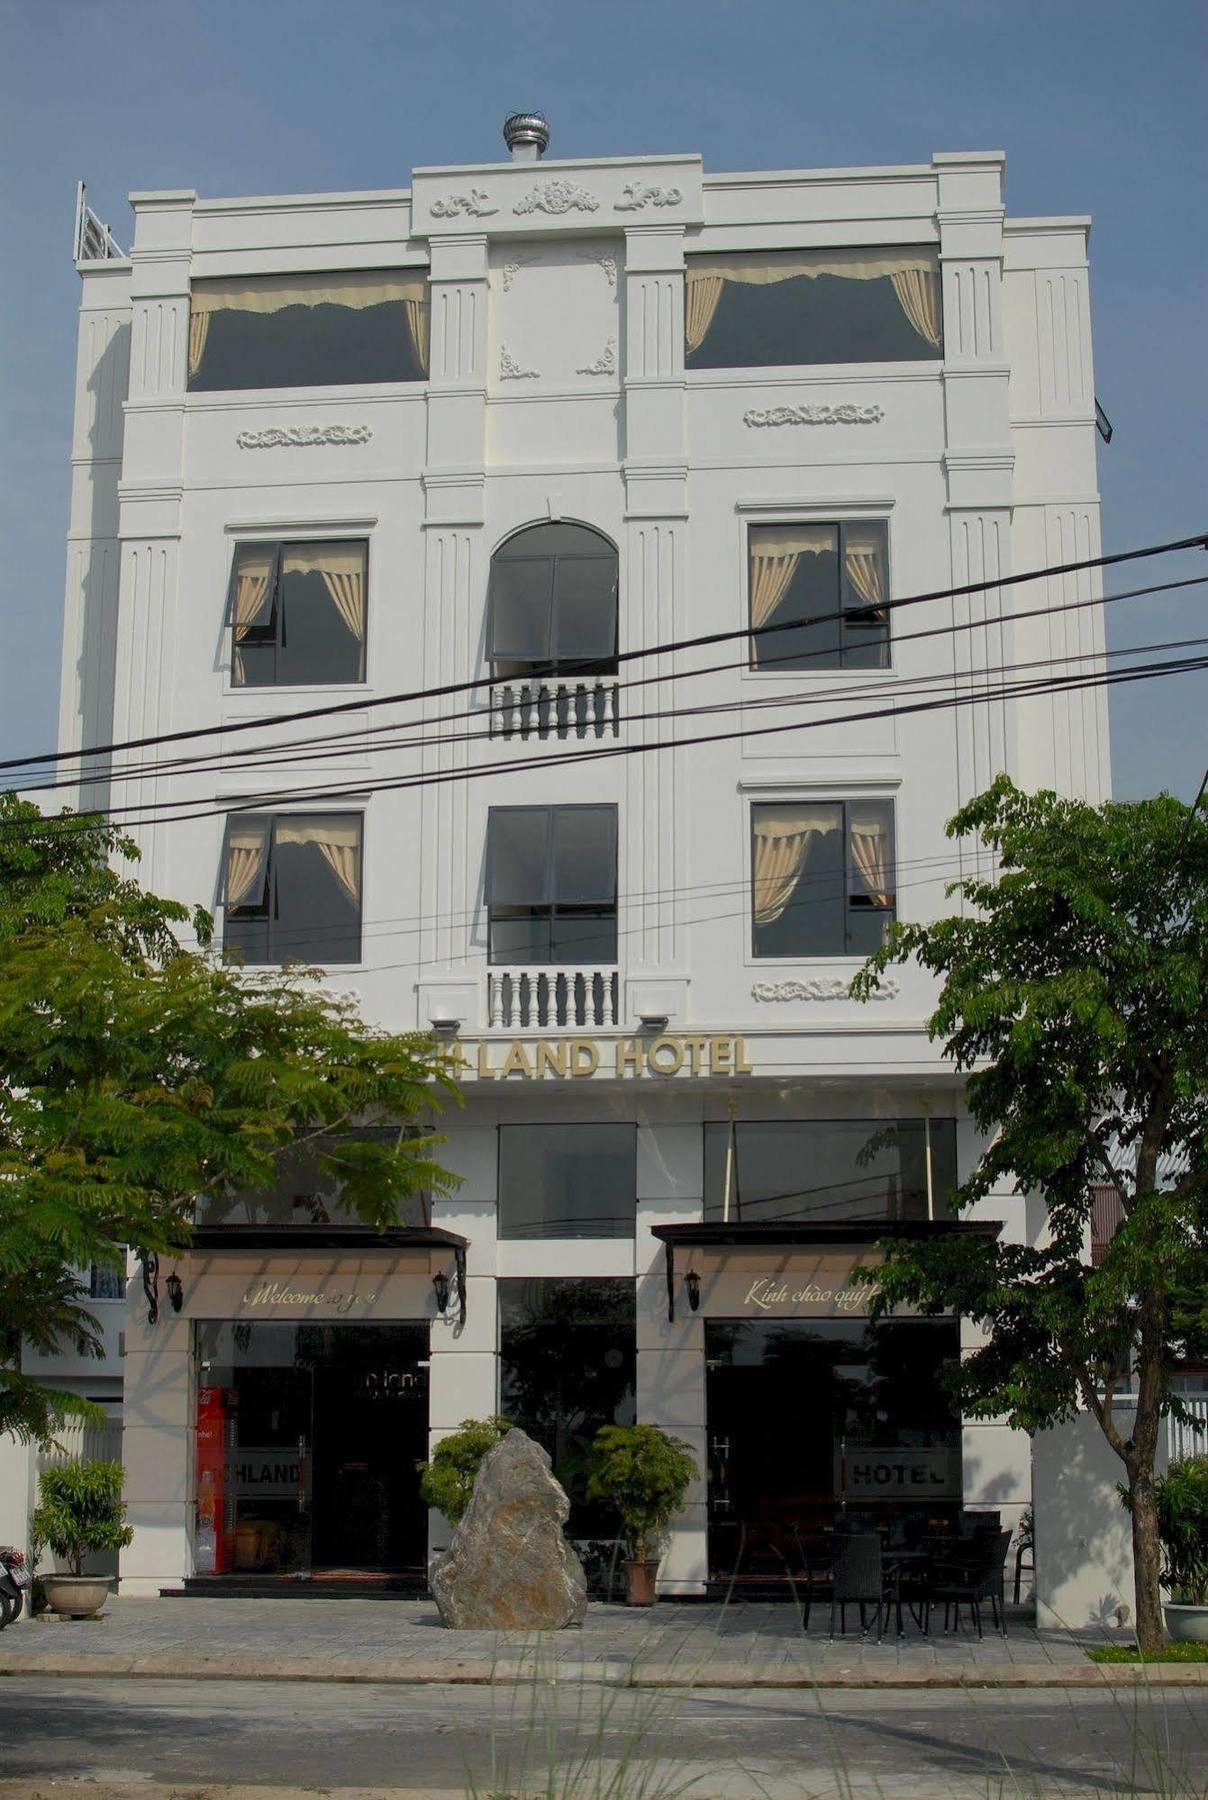 Rich Land Hotel Danang Exterior foto